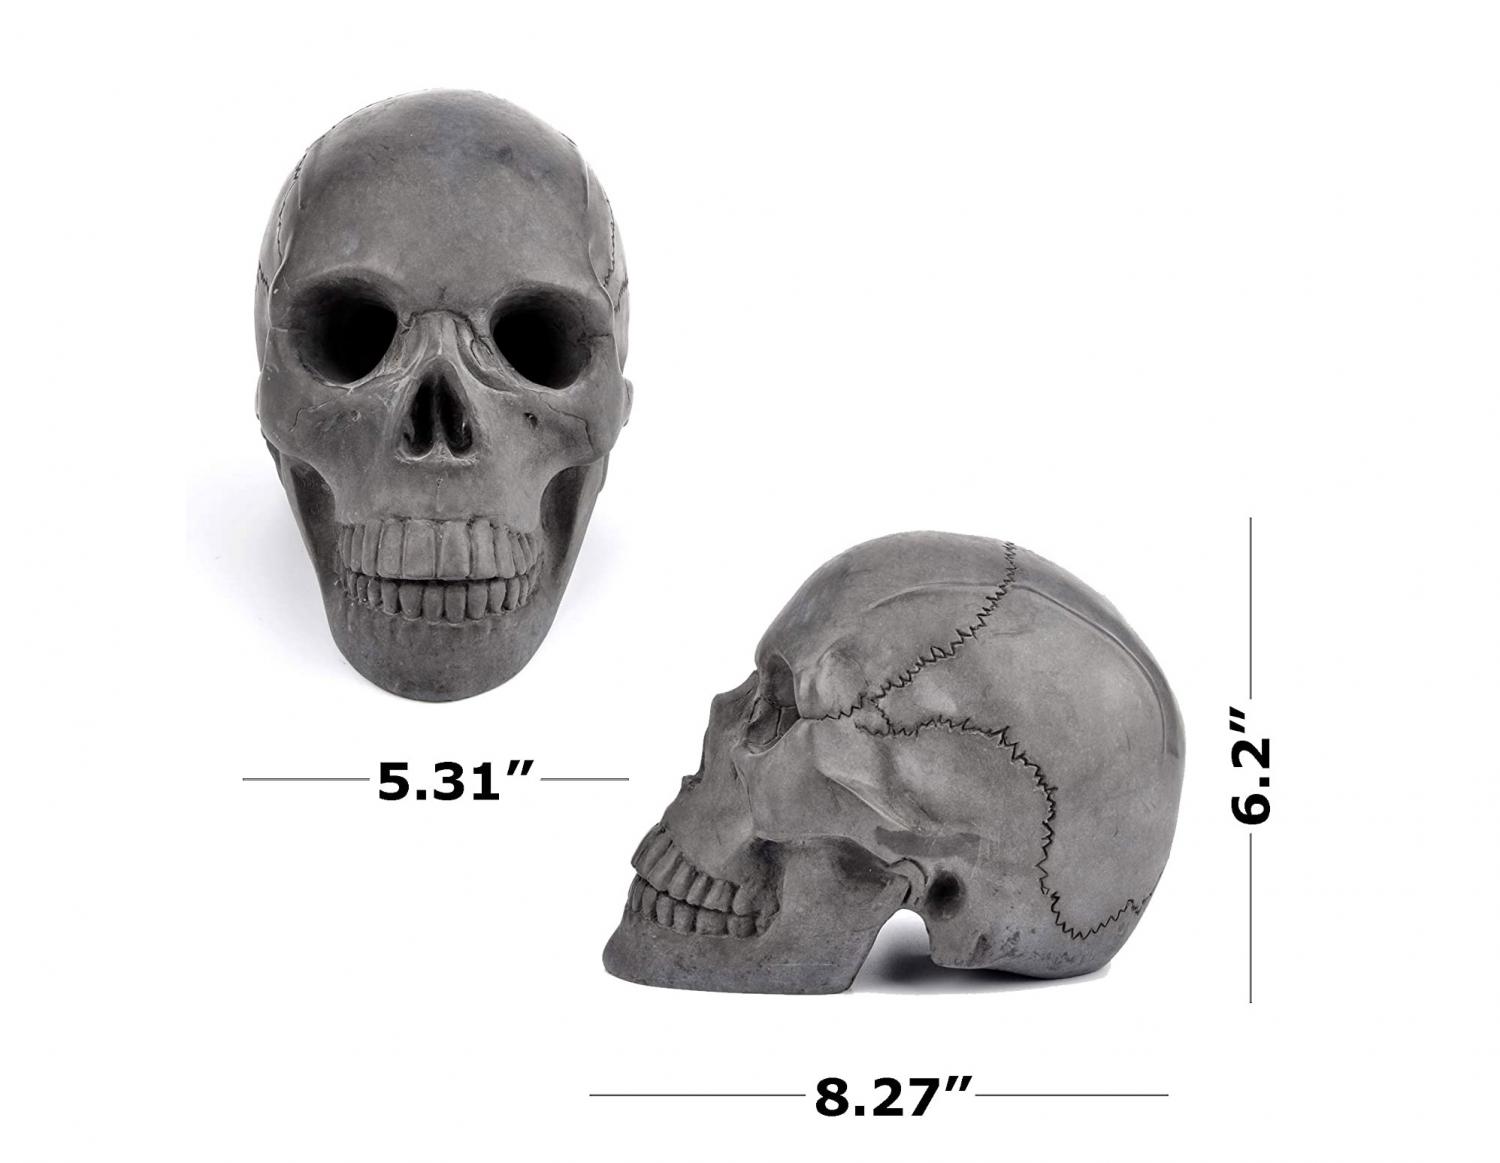 Fake Fireproof Human Skulls For Your Fire-pit - Burning skull bonfire Halloween prop